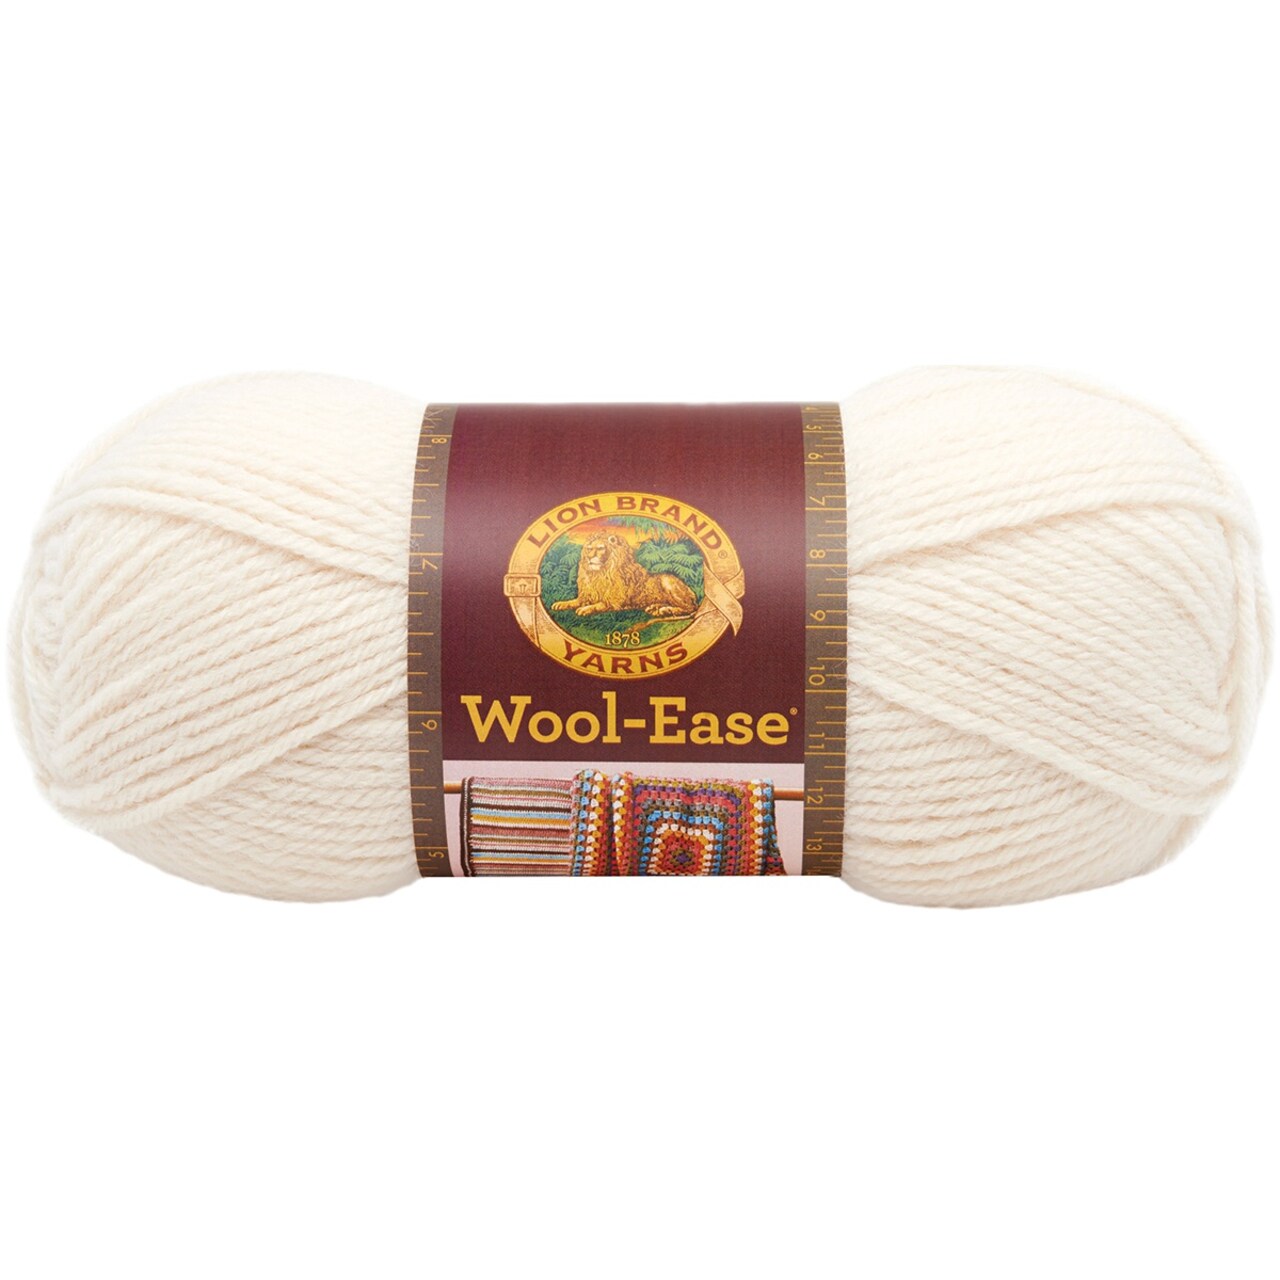 Multipack of 10 - Lion Brand Wool-Ease Yarn -Fisherman